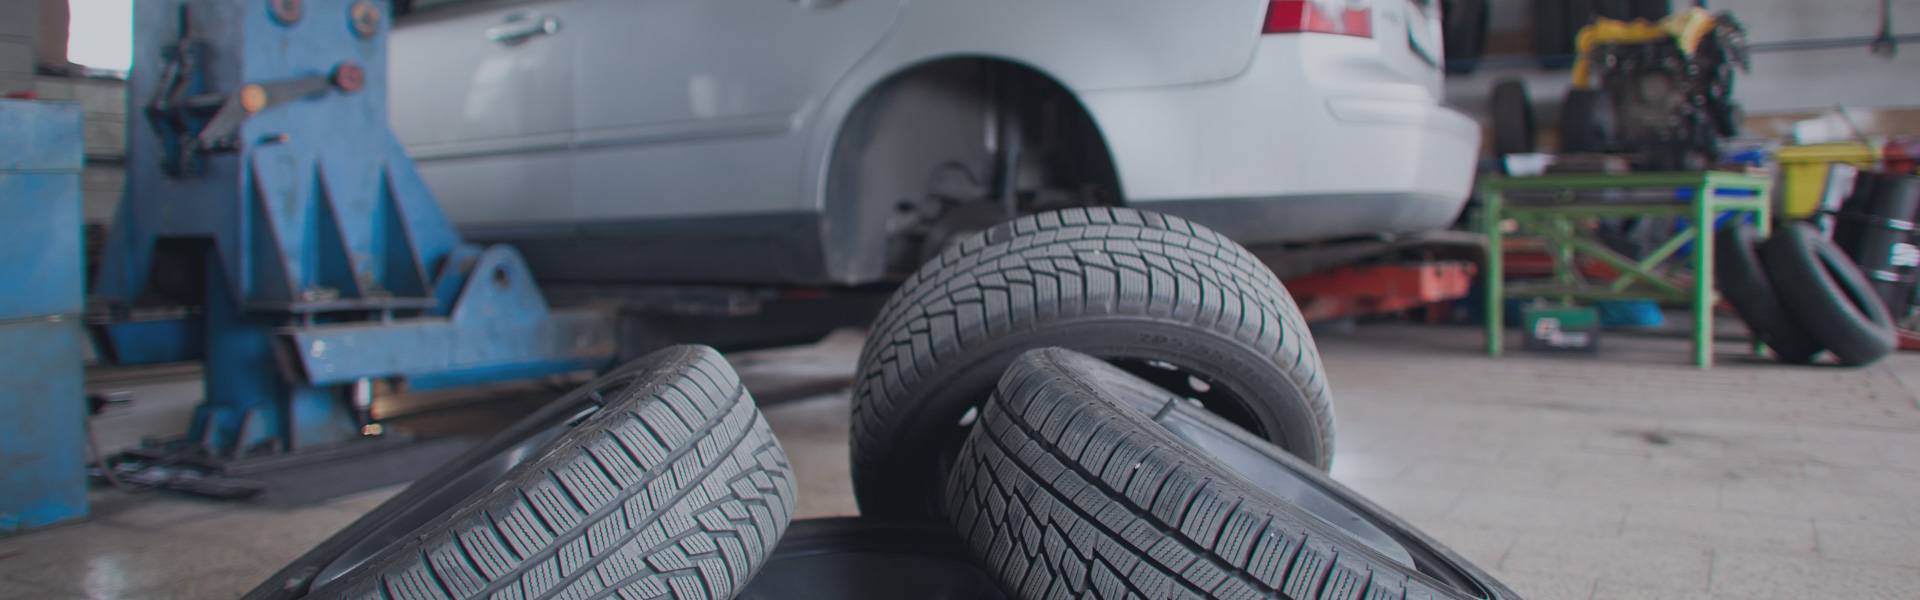 central auto repair memphis new tires and tire repairs